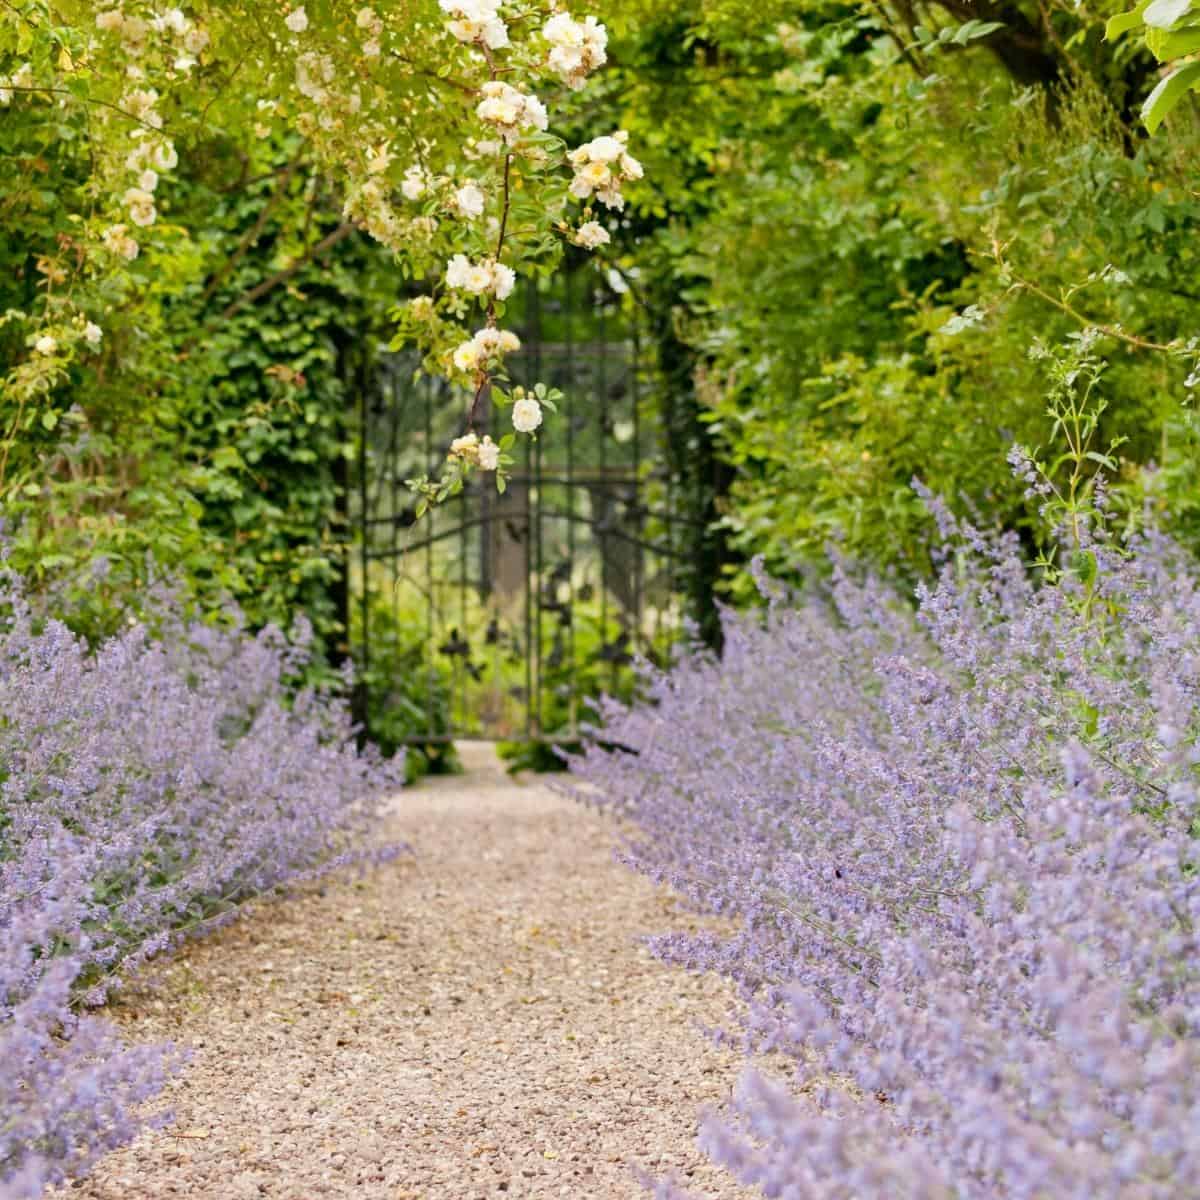 natural looking pea gravel pathway through lavender